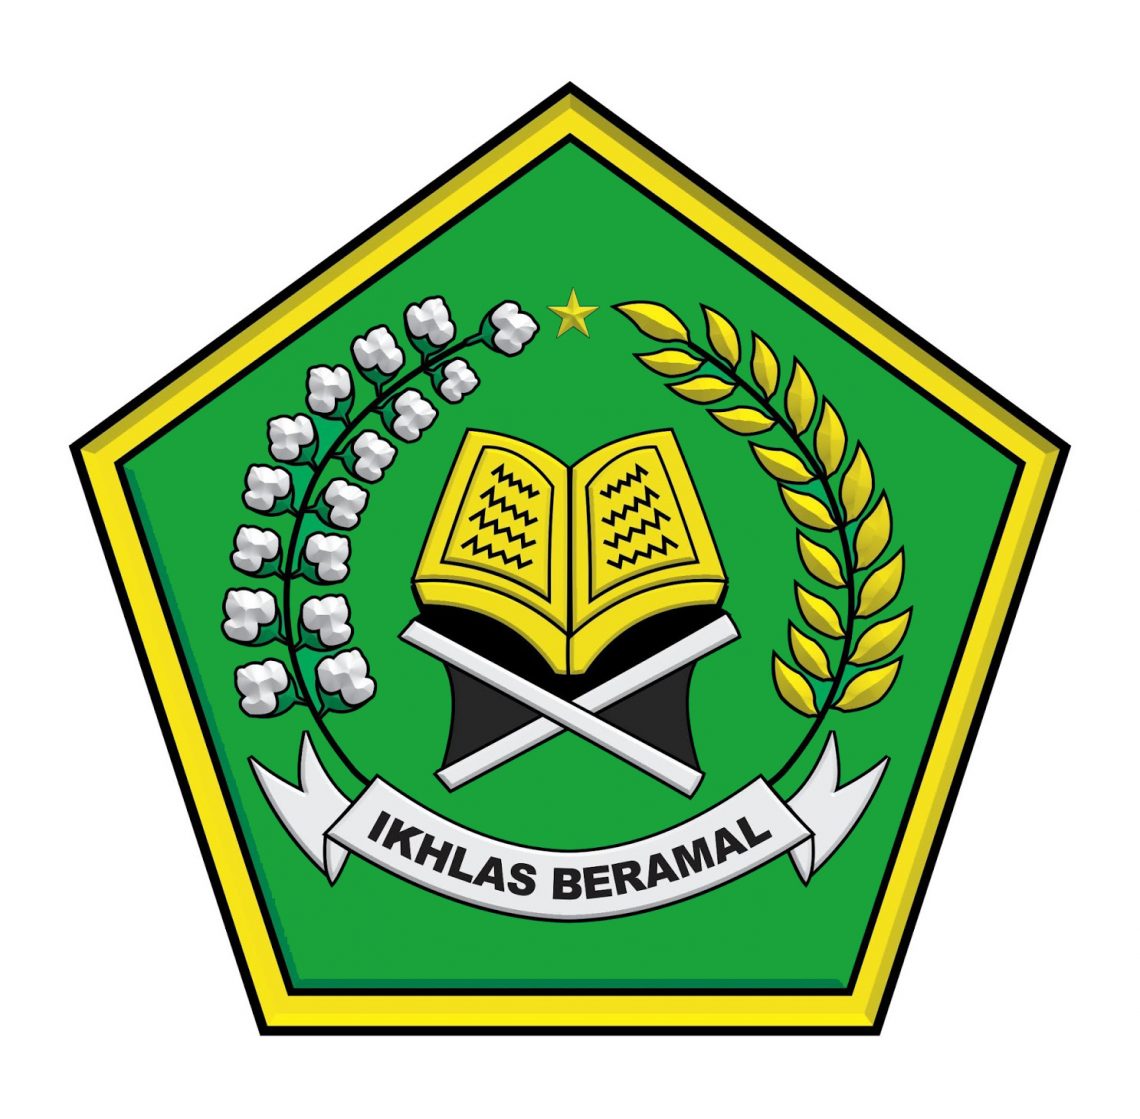 Logo Ikhlas Beramal Warna & Hitam Putih | DOWNLOAD - rekreartive